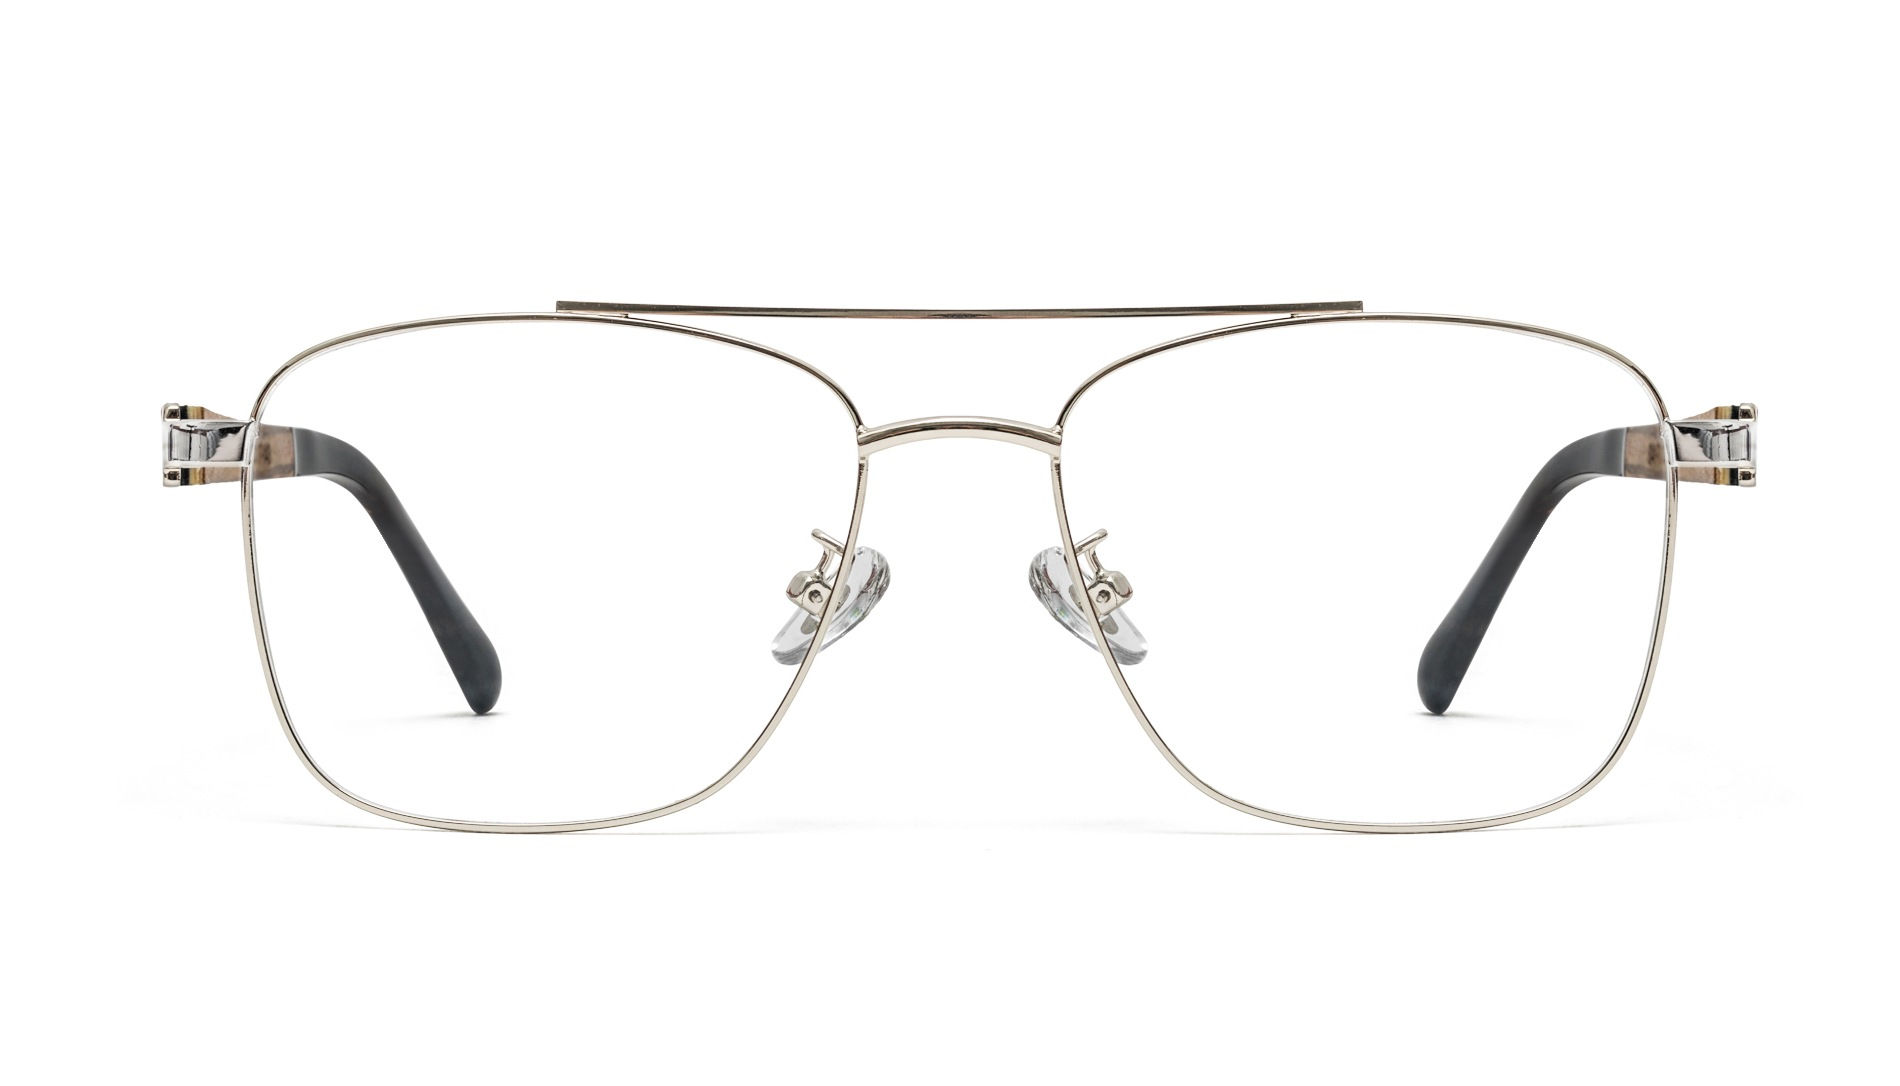 Silver eyeglasses frames